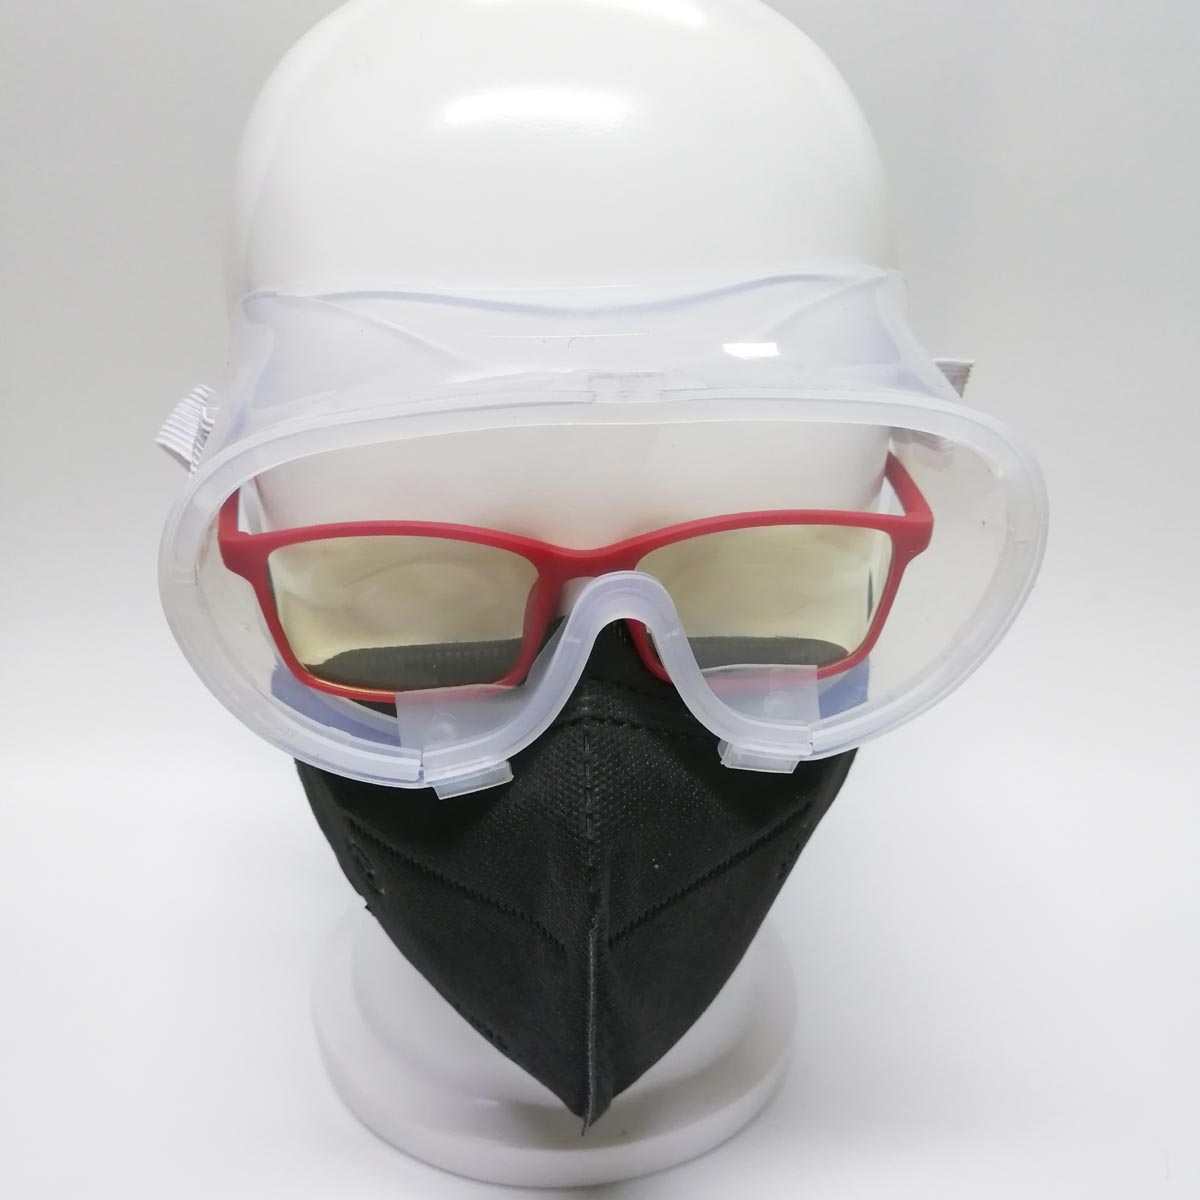 Protective goggles 3.jpg